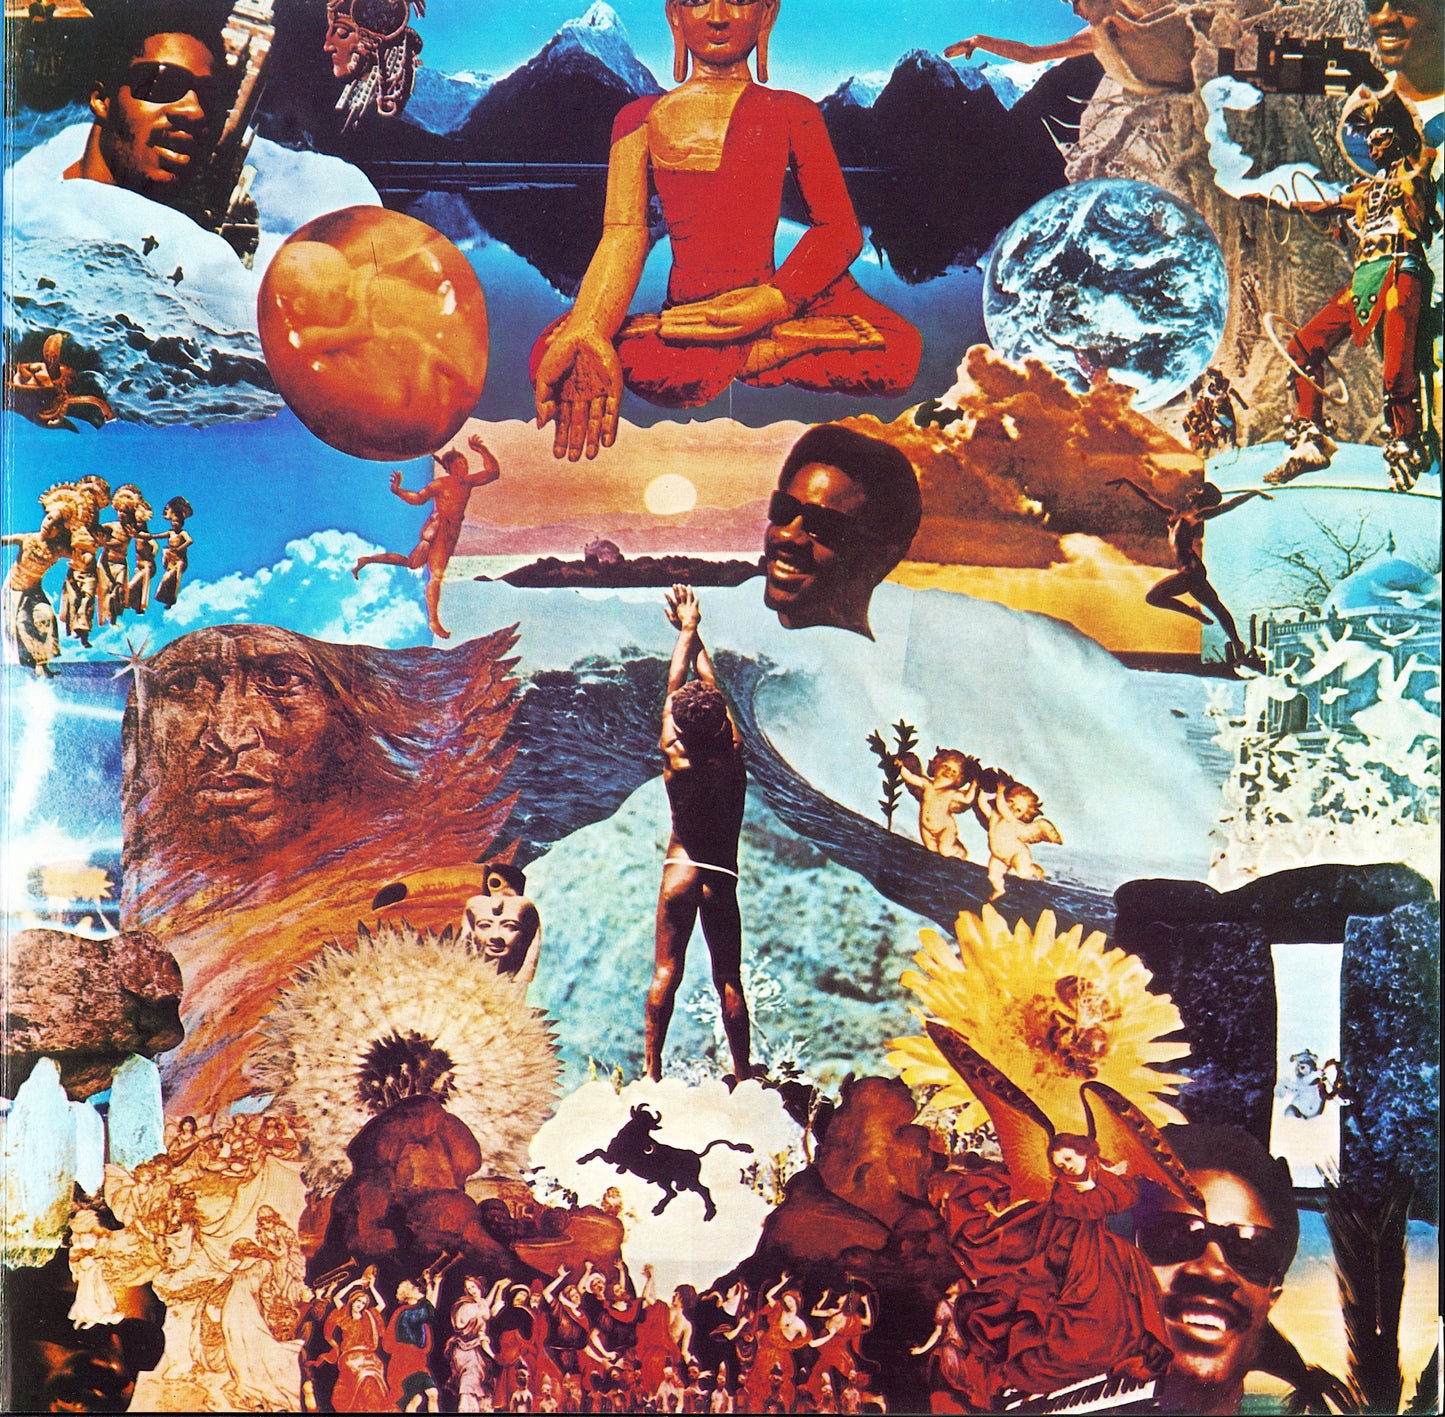 Stevie Wonder - Music Of My Mind Vinyl LP